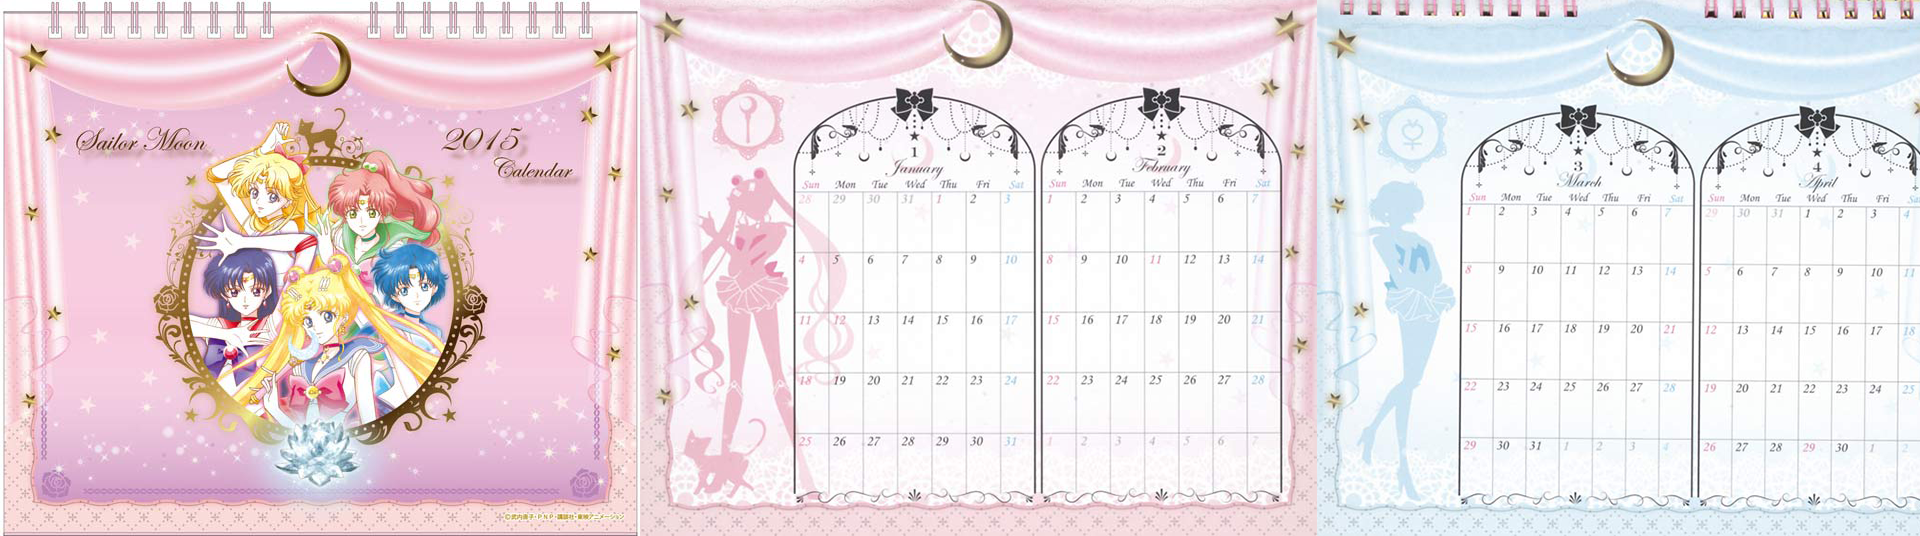 Most Wished for 2015 Anime Calendars haruhichan.com Sailor Moon Crystal calendar